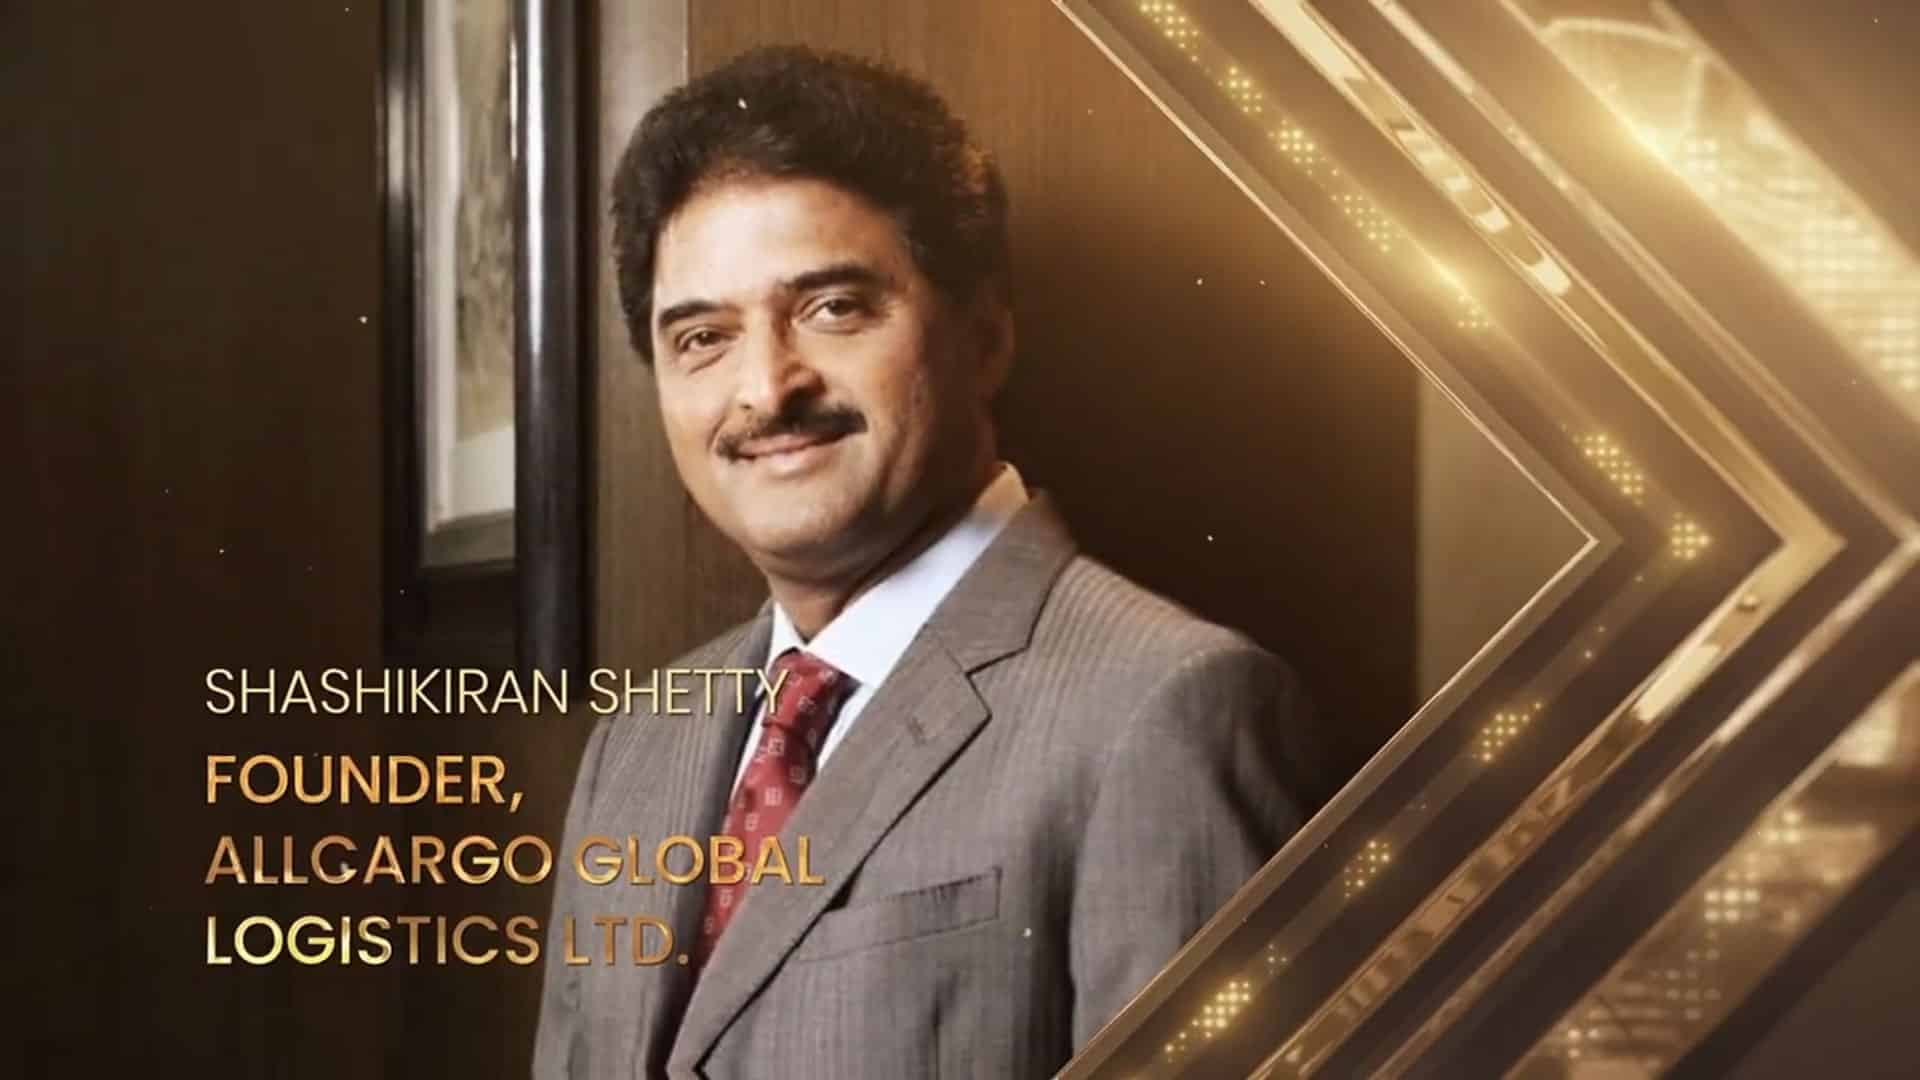 Felicitating Mr. Shashi Kiran Shetty, a pioneer of global logistics and heartfelt leadership